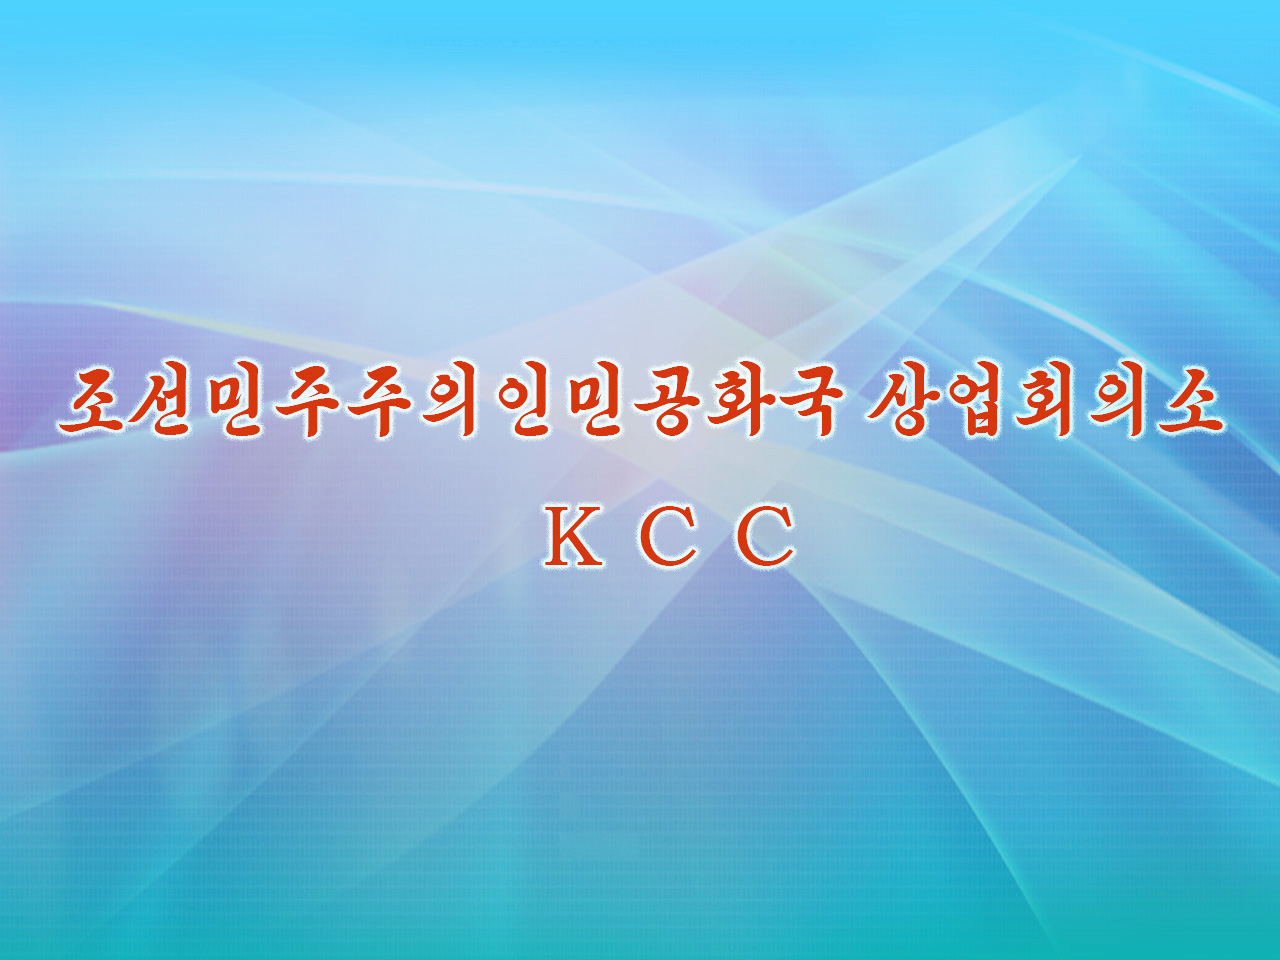 DPR Korea Chamber of Commerce (Abbreviation: KCC)